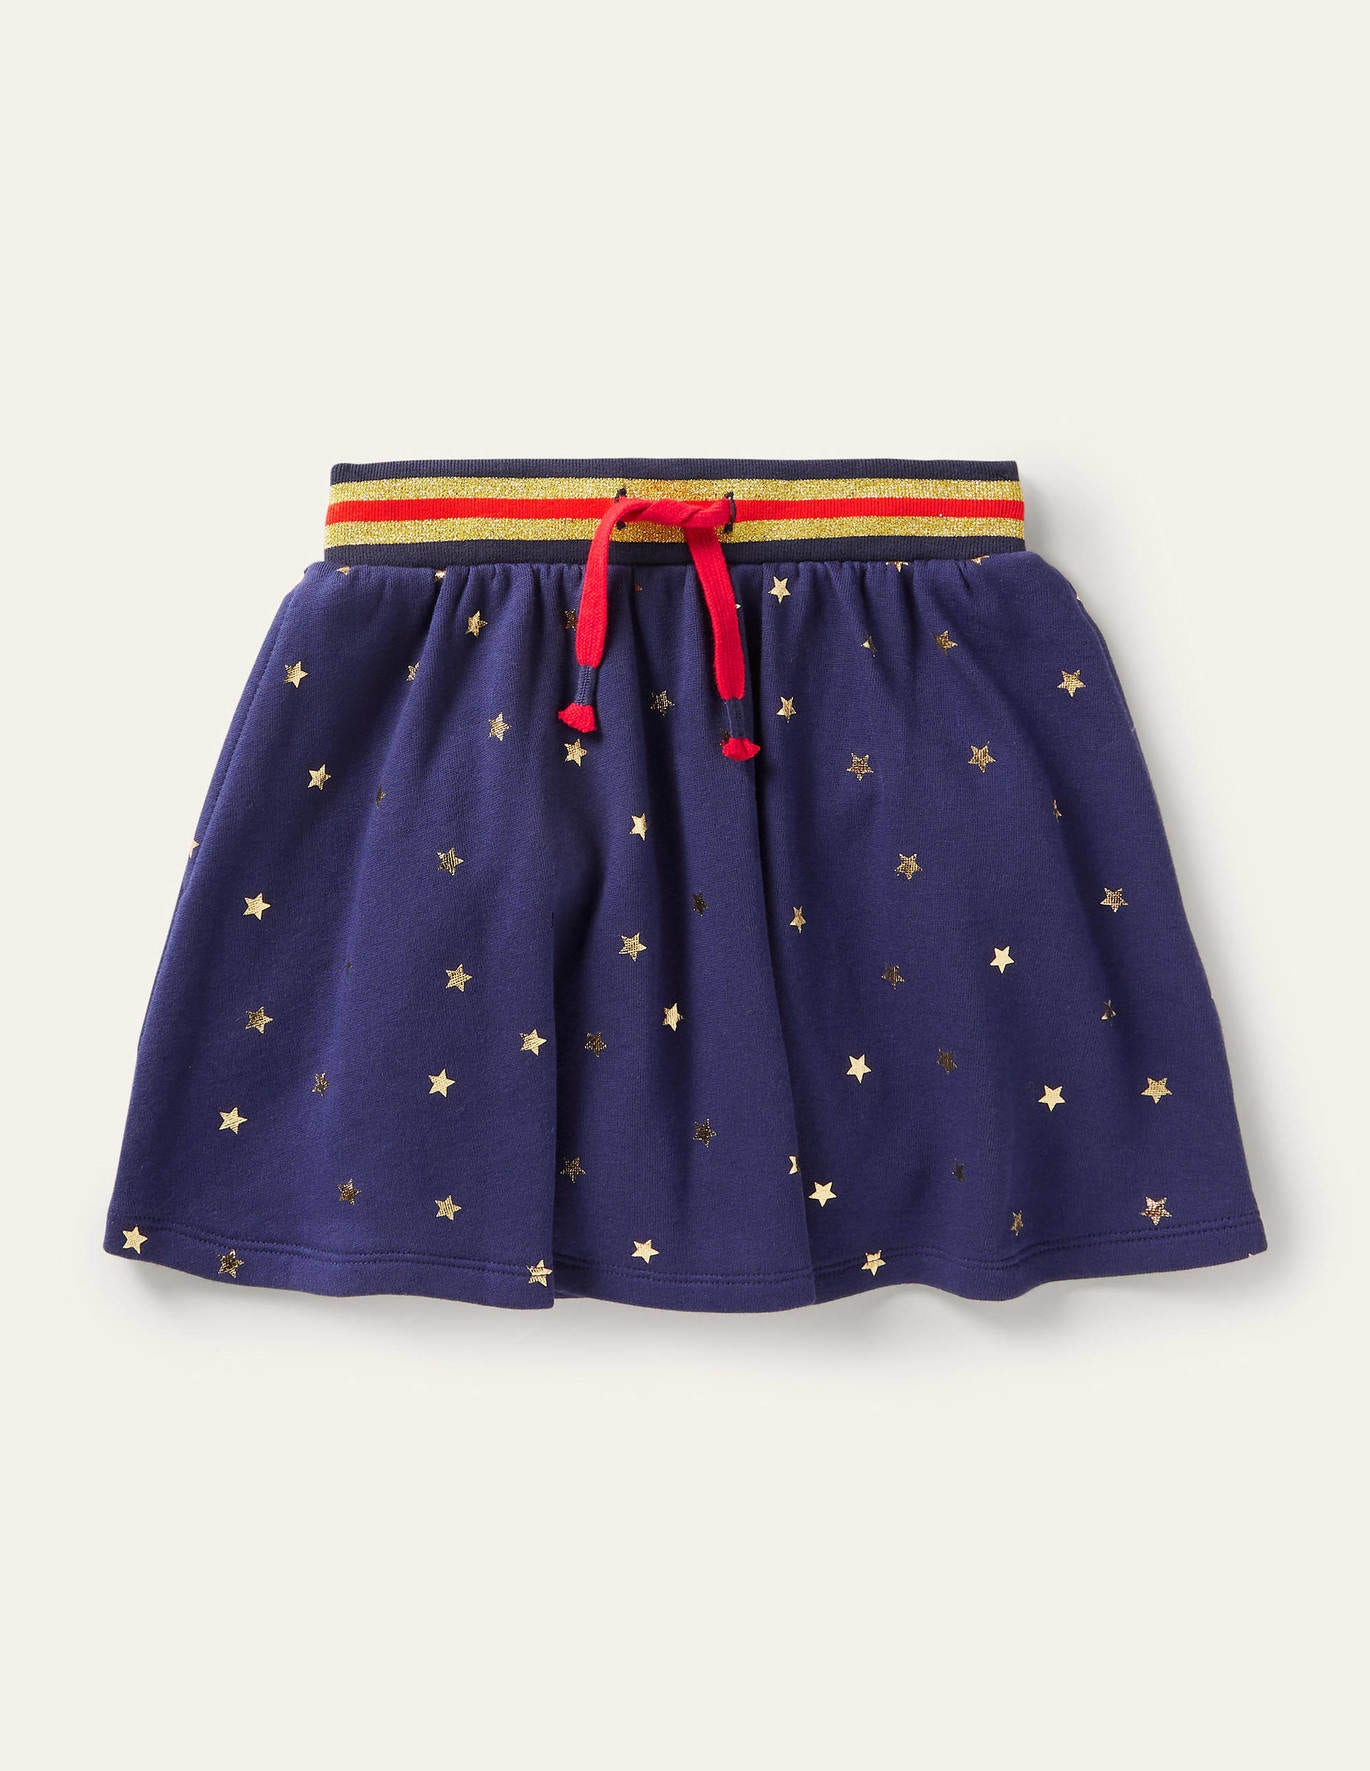 Boden Cosy Twirly Sweatshirt Skirt - Starboard Blue Gold Star